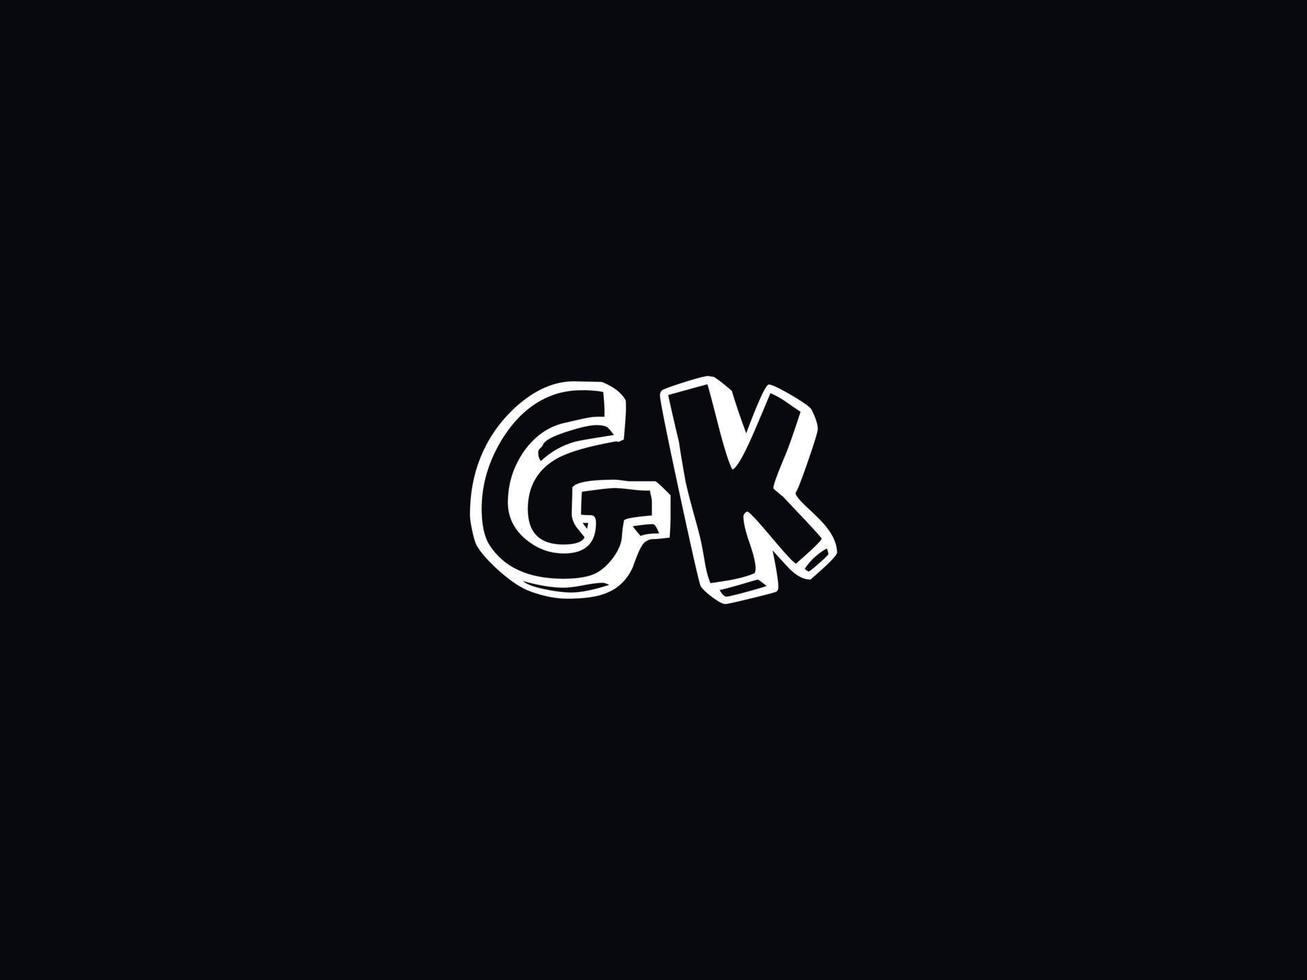 noir blanc gk logo, initiale gk lettre logo icône vecteur